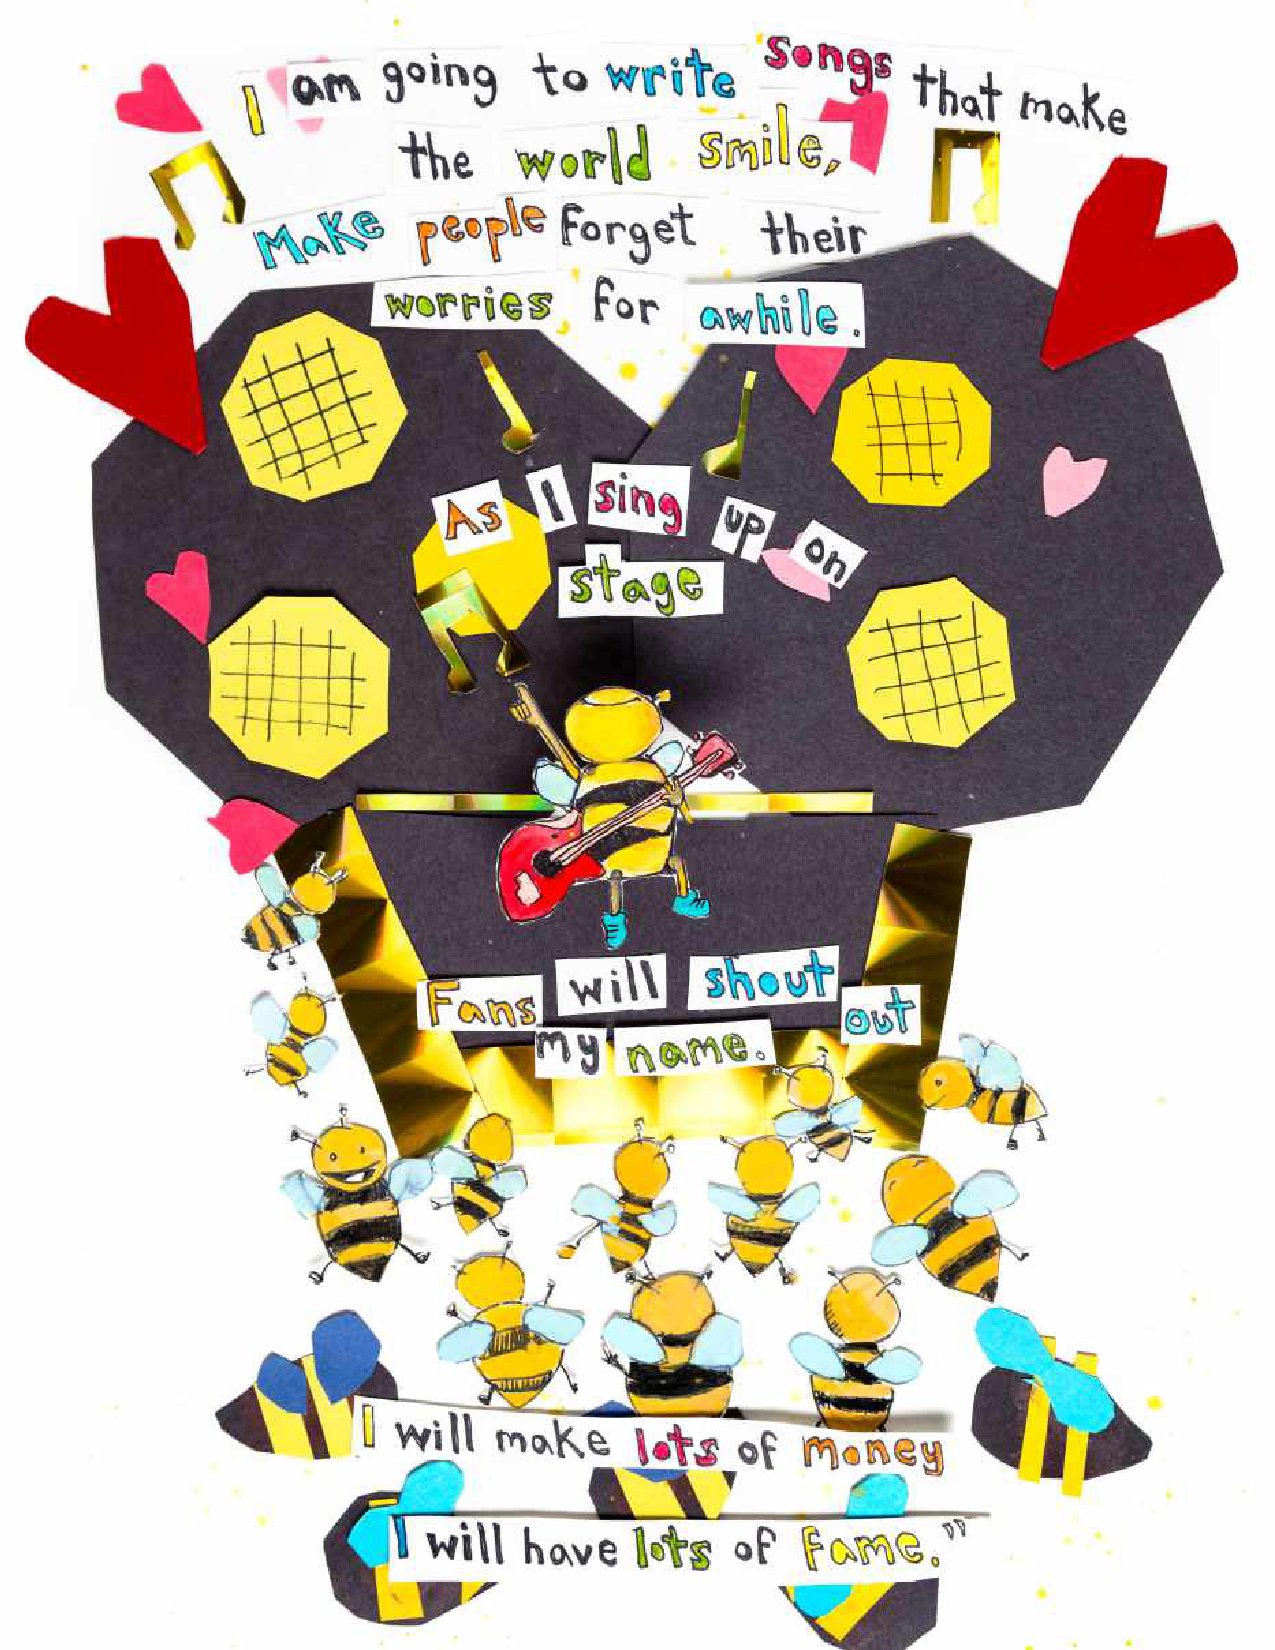 Bee Love